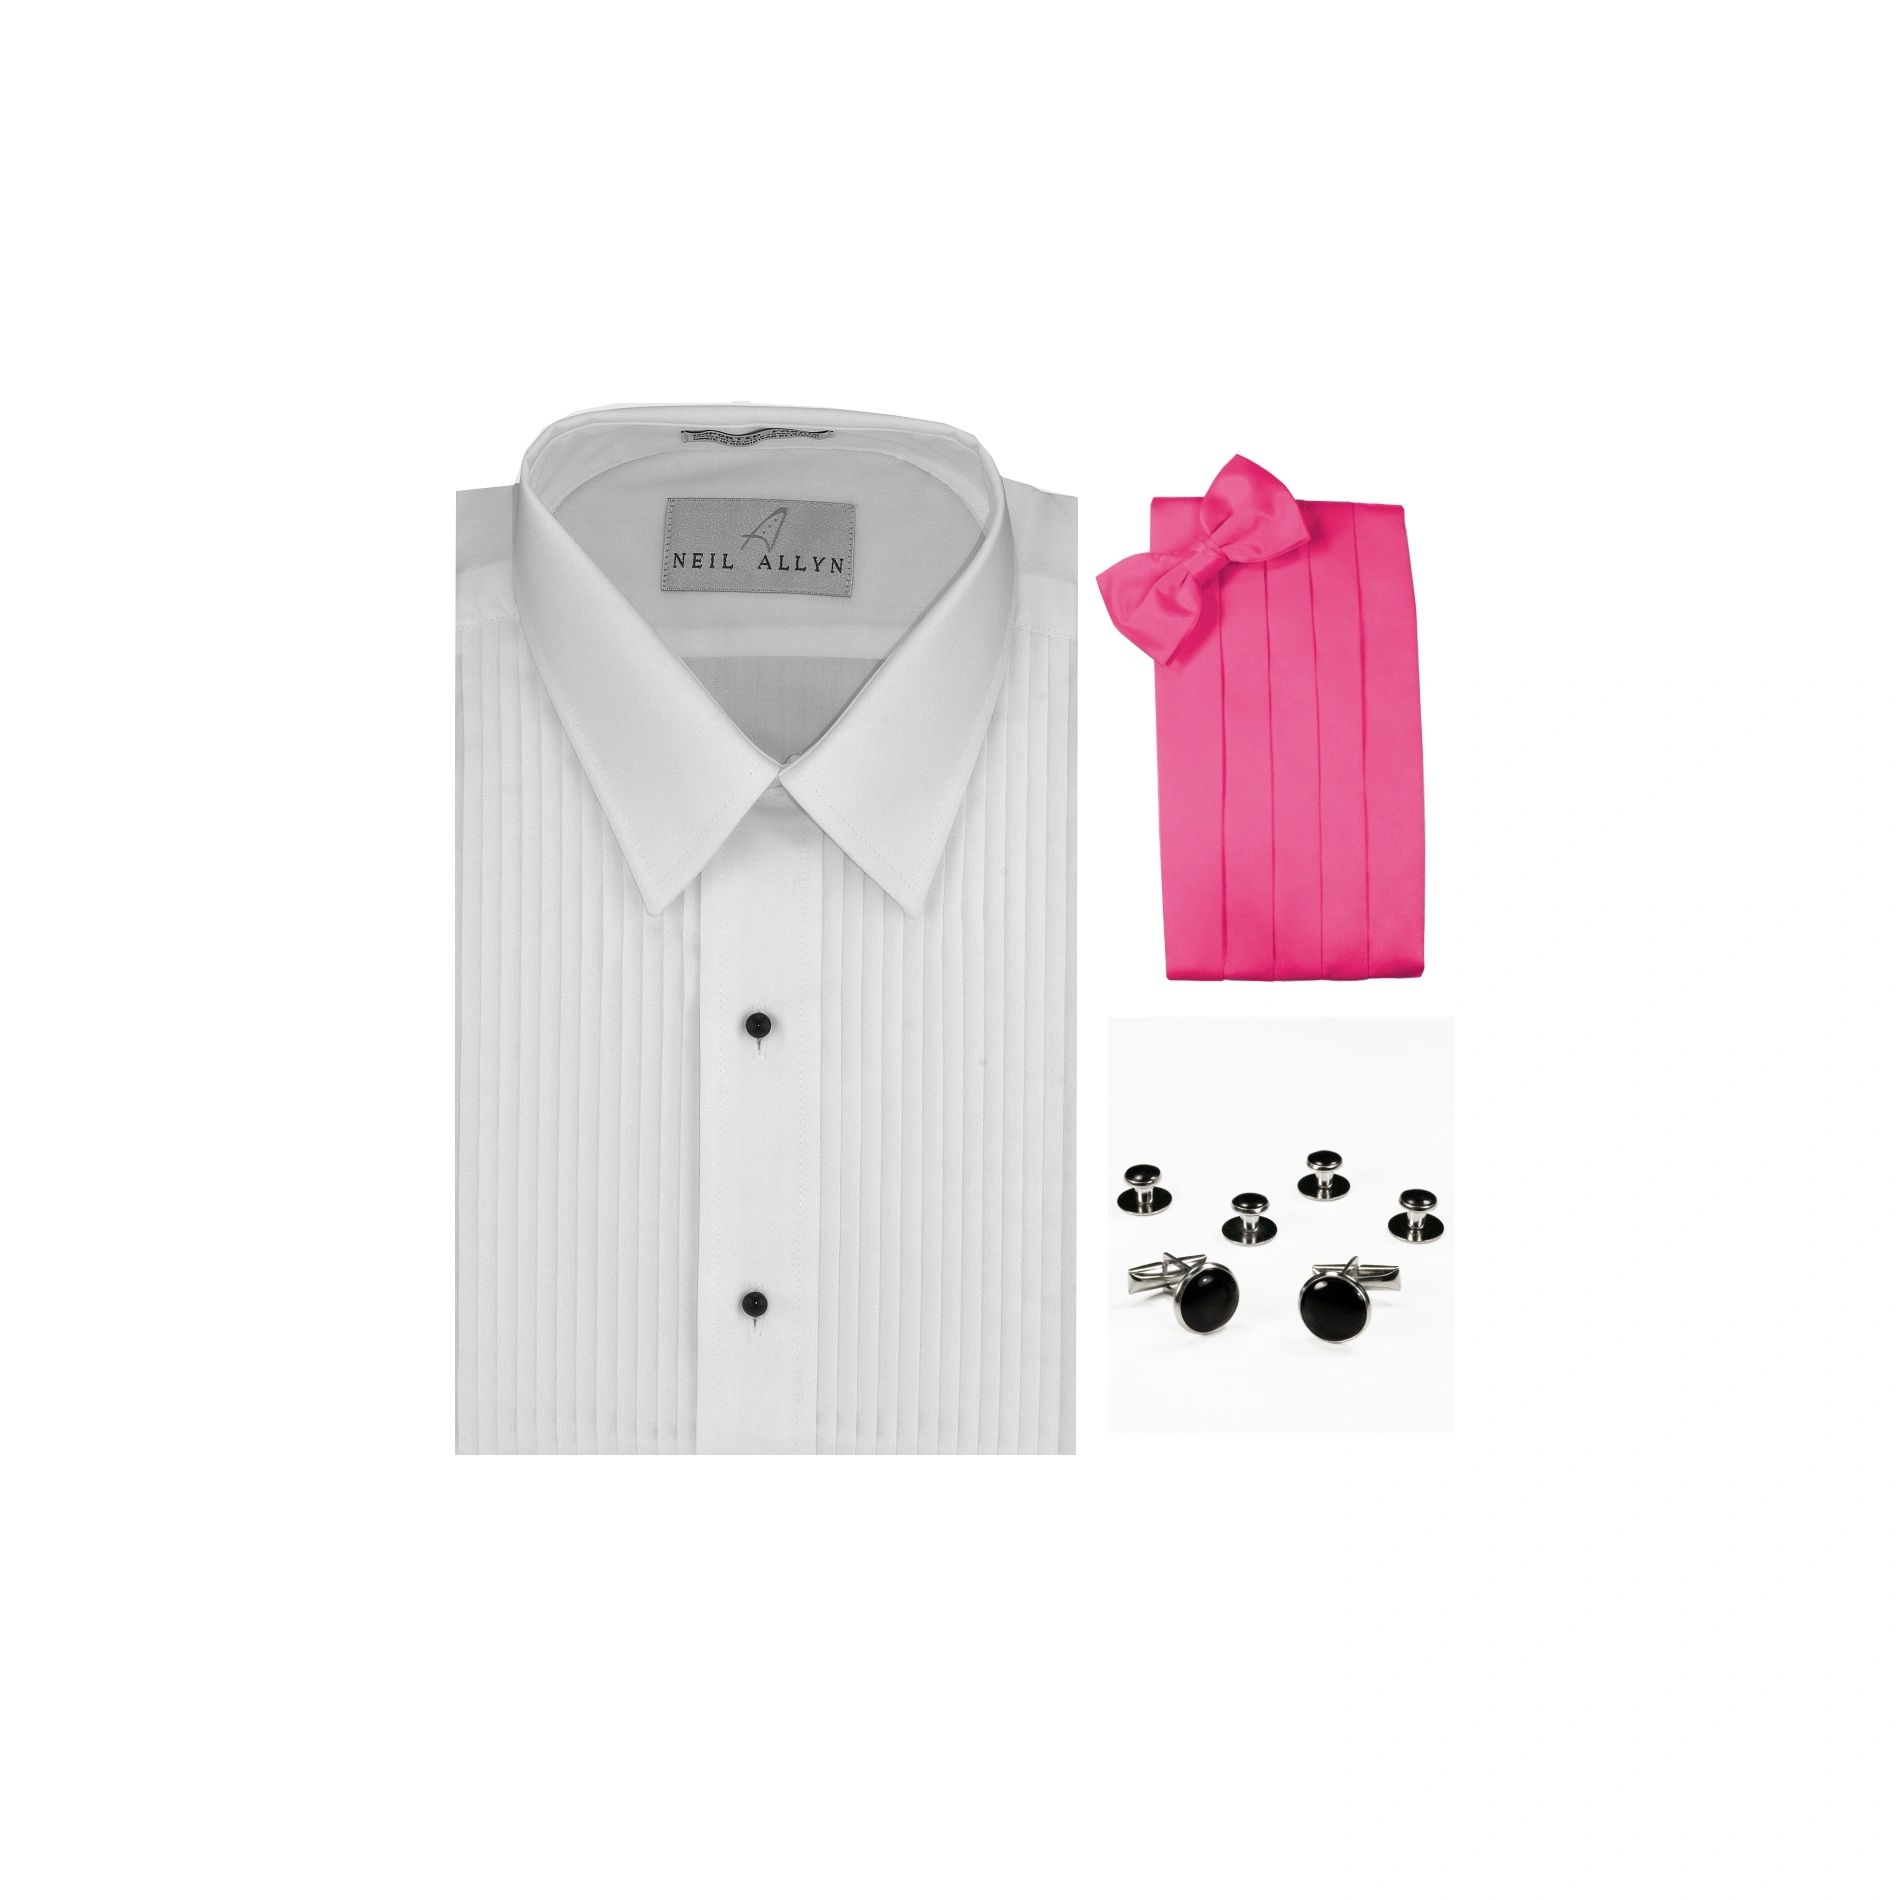 Neil Allyn Lay-Down Collar 1/4" Pleats Formal Tuxedo Shirt, Hot Pink Cummerbund, Bow-Tie, Cuff Links & Studs Set